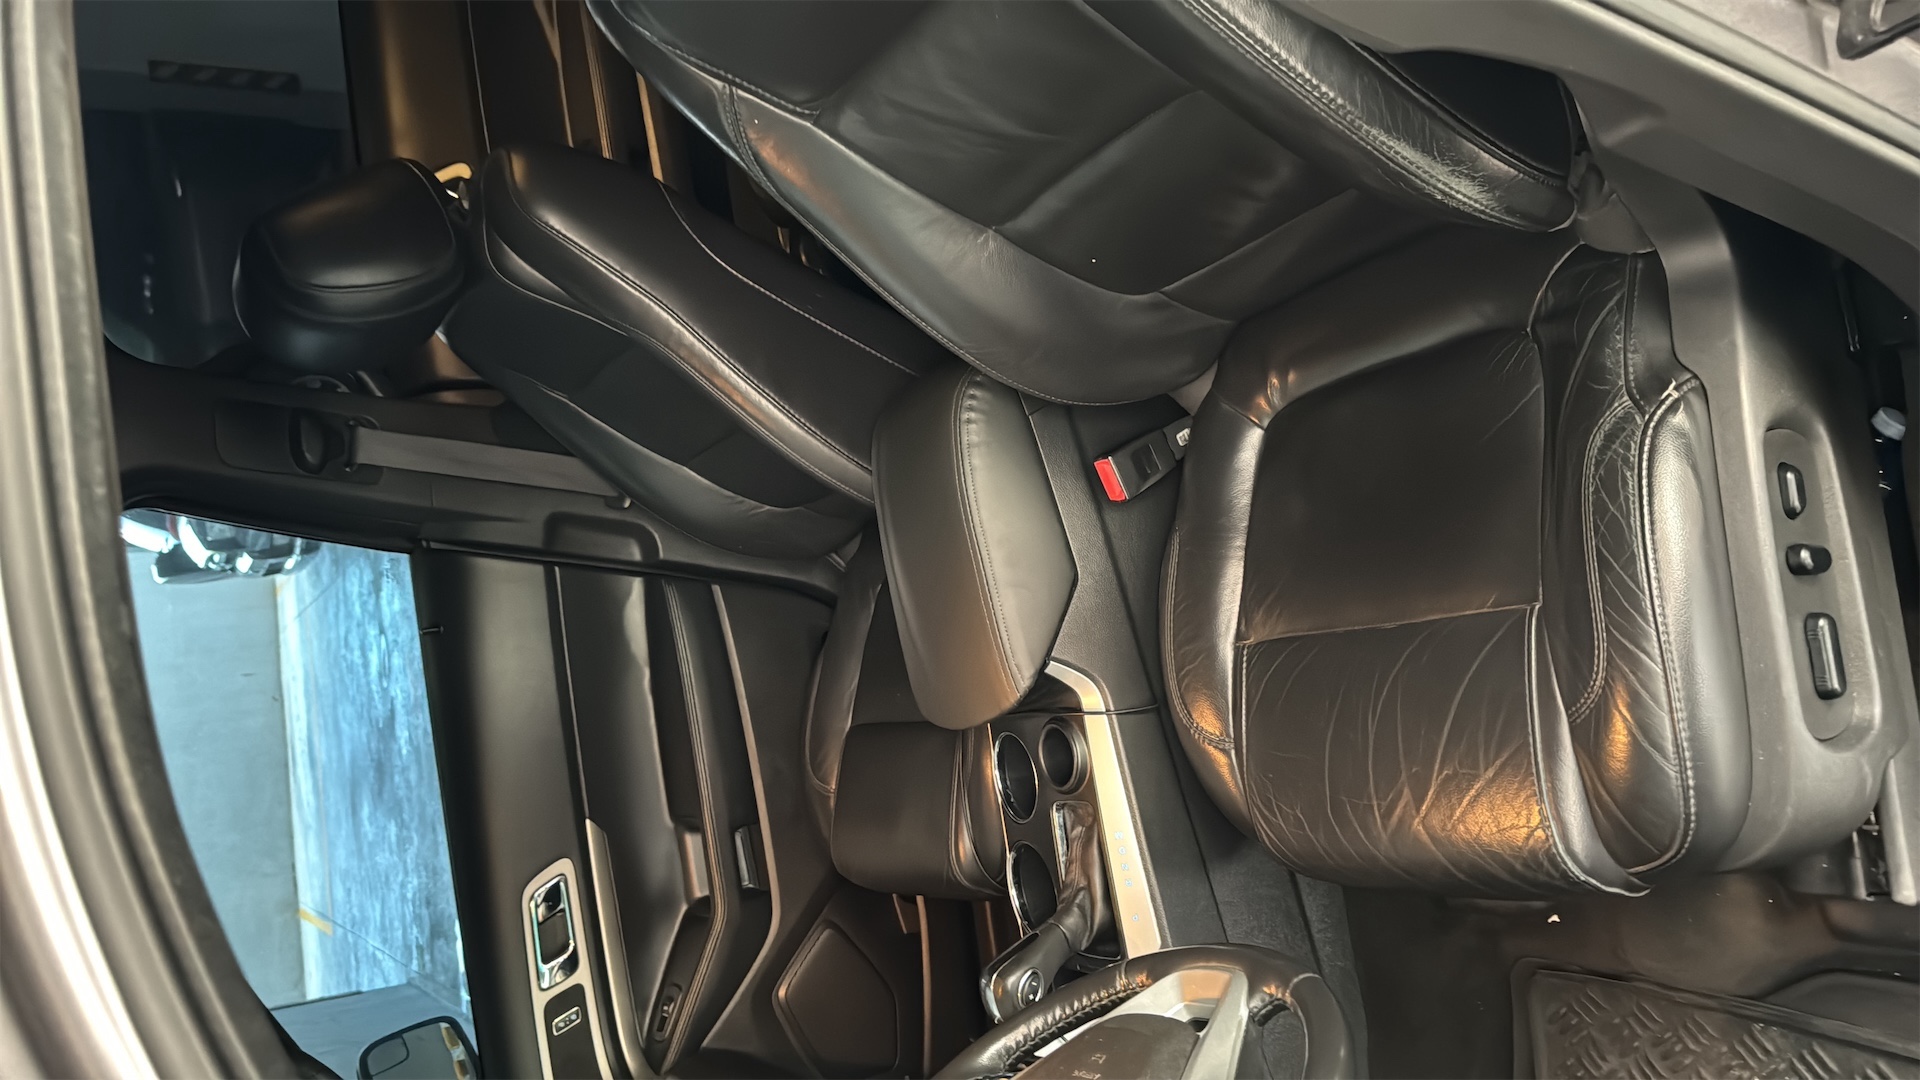 jeepetas y camionetas - Vendo Ford Explorer XLT 2013
 8